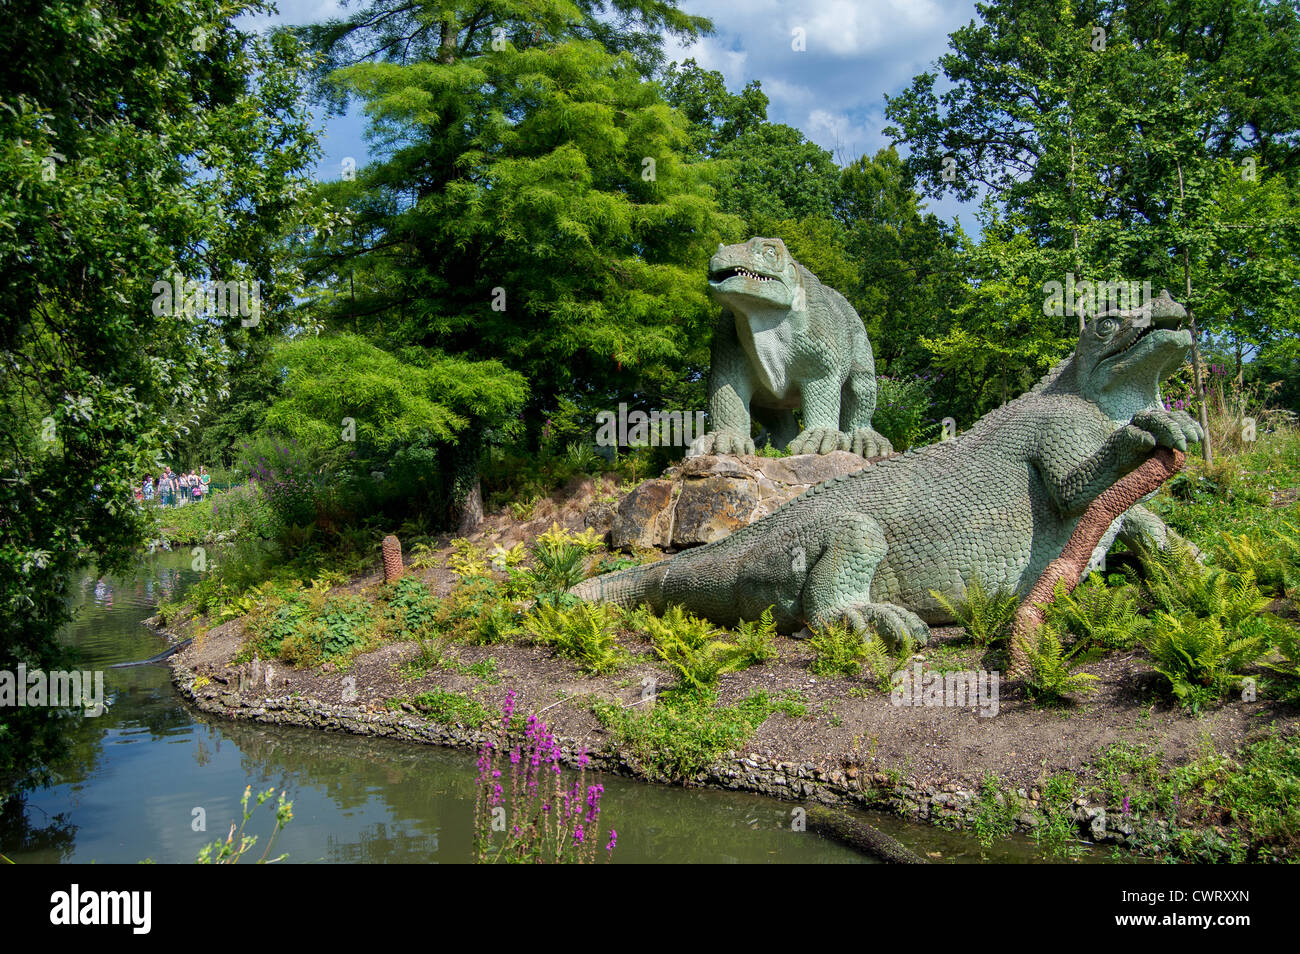 Iguanodons - Crystal Palace Parco dinosauri dello scultore Benjamin Waterhouse Hawkins Foto Stock